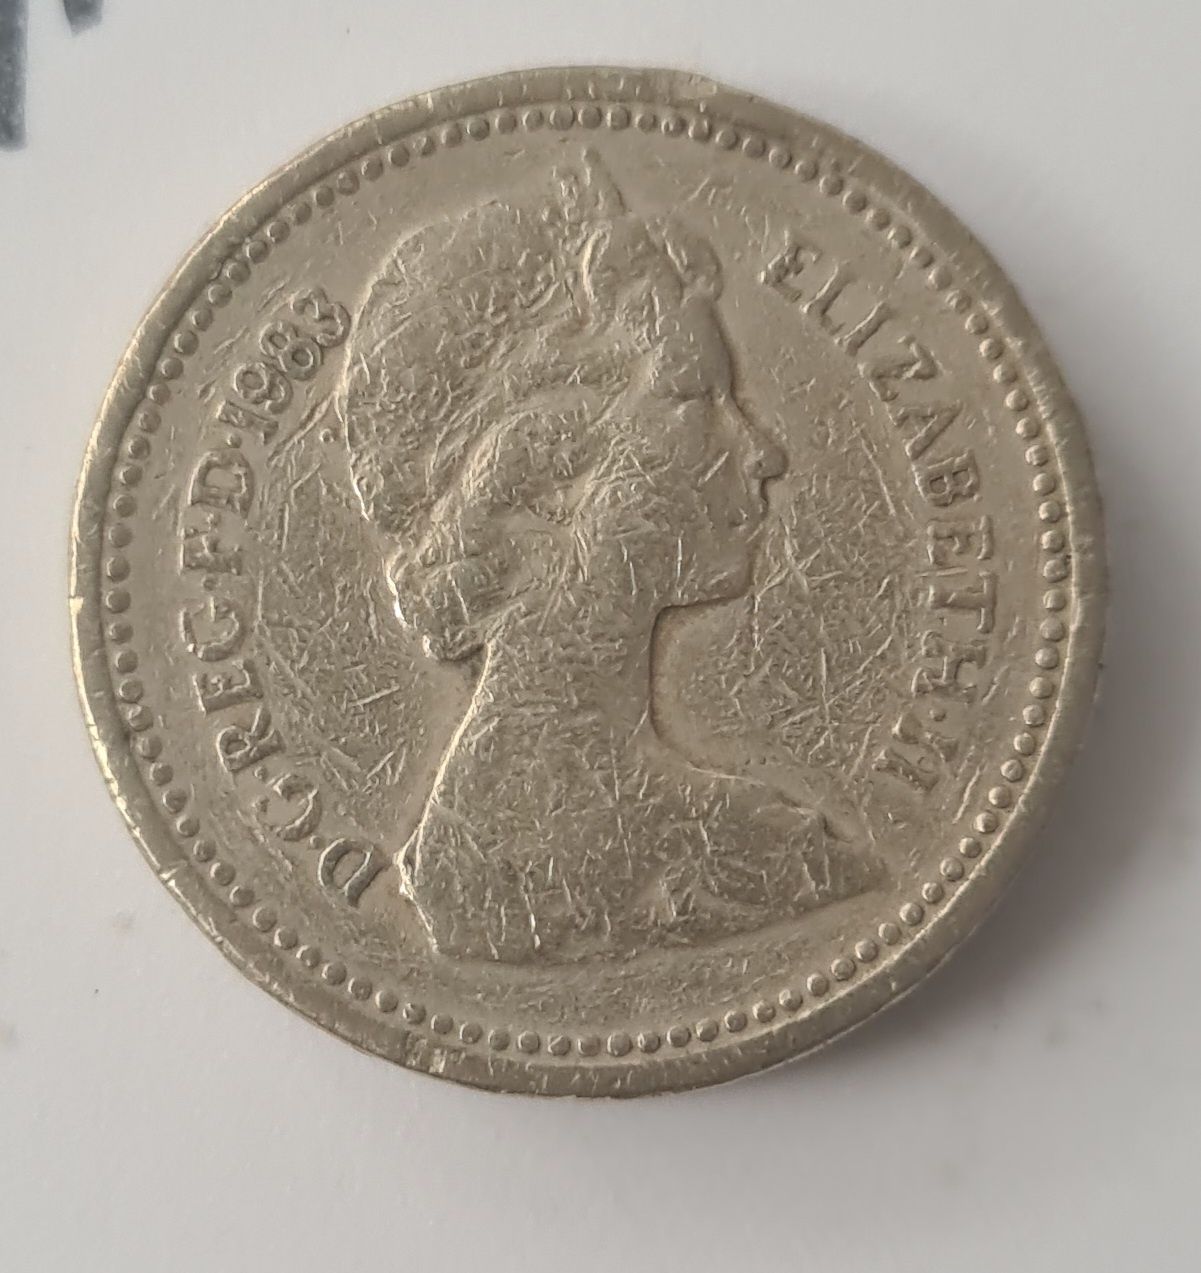 Moneta One pound Elizabeth II 1983